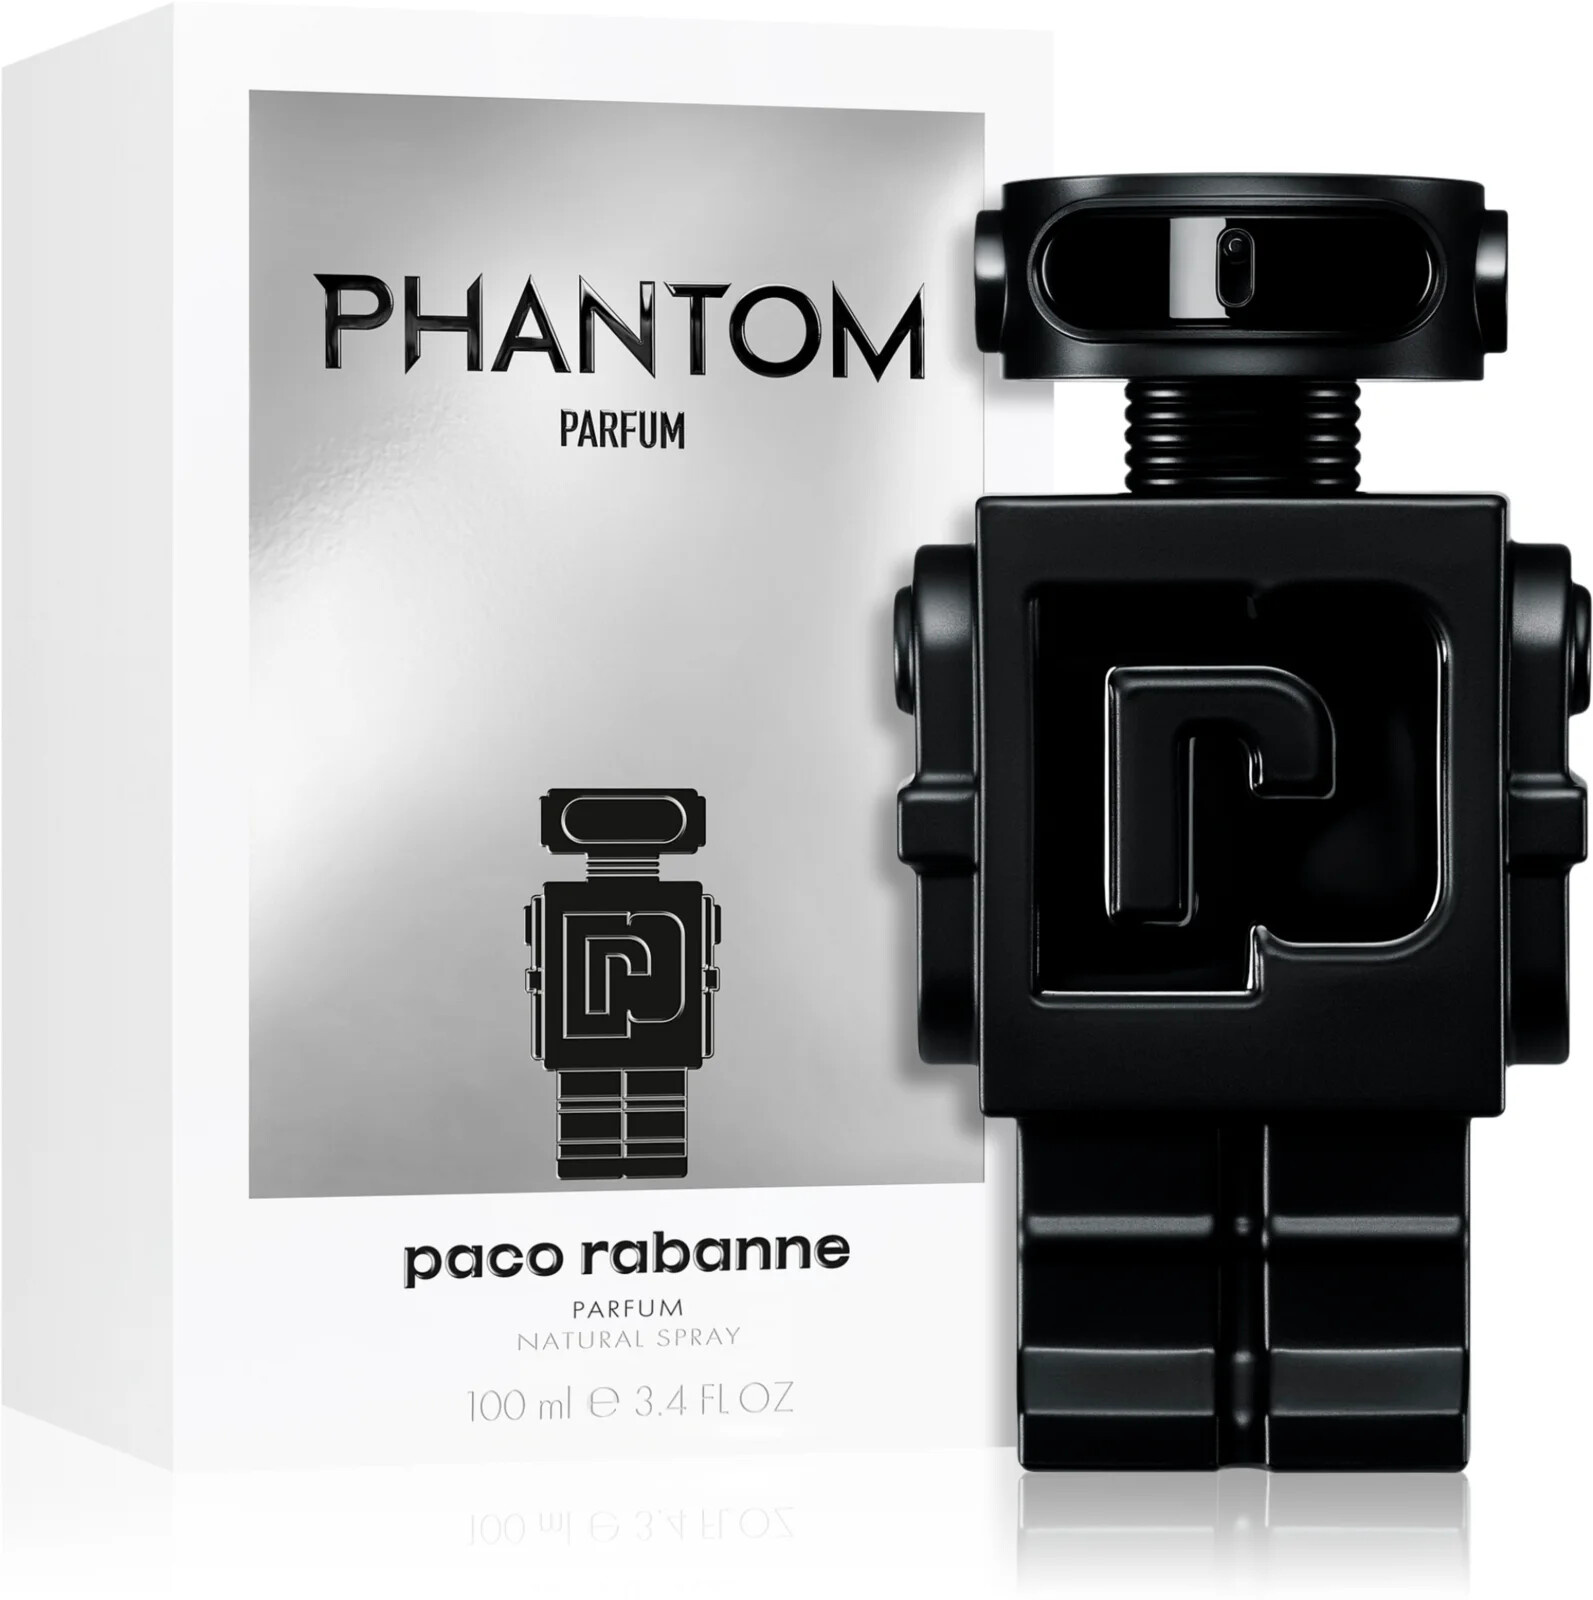 Paco Rabanne Phantom Parfum parfém pro muže 100 ml